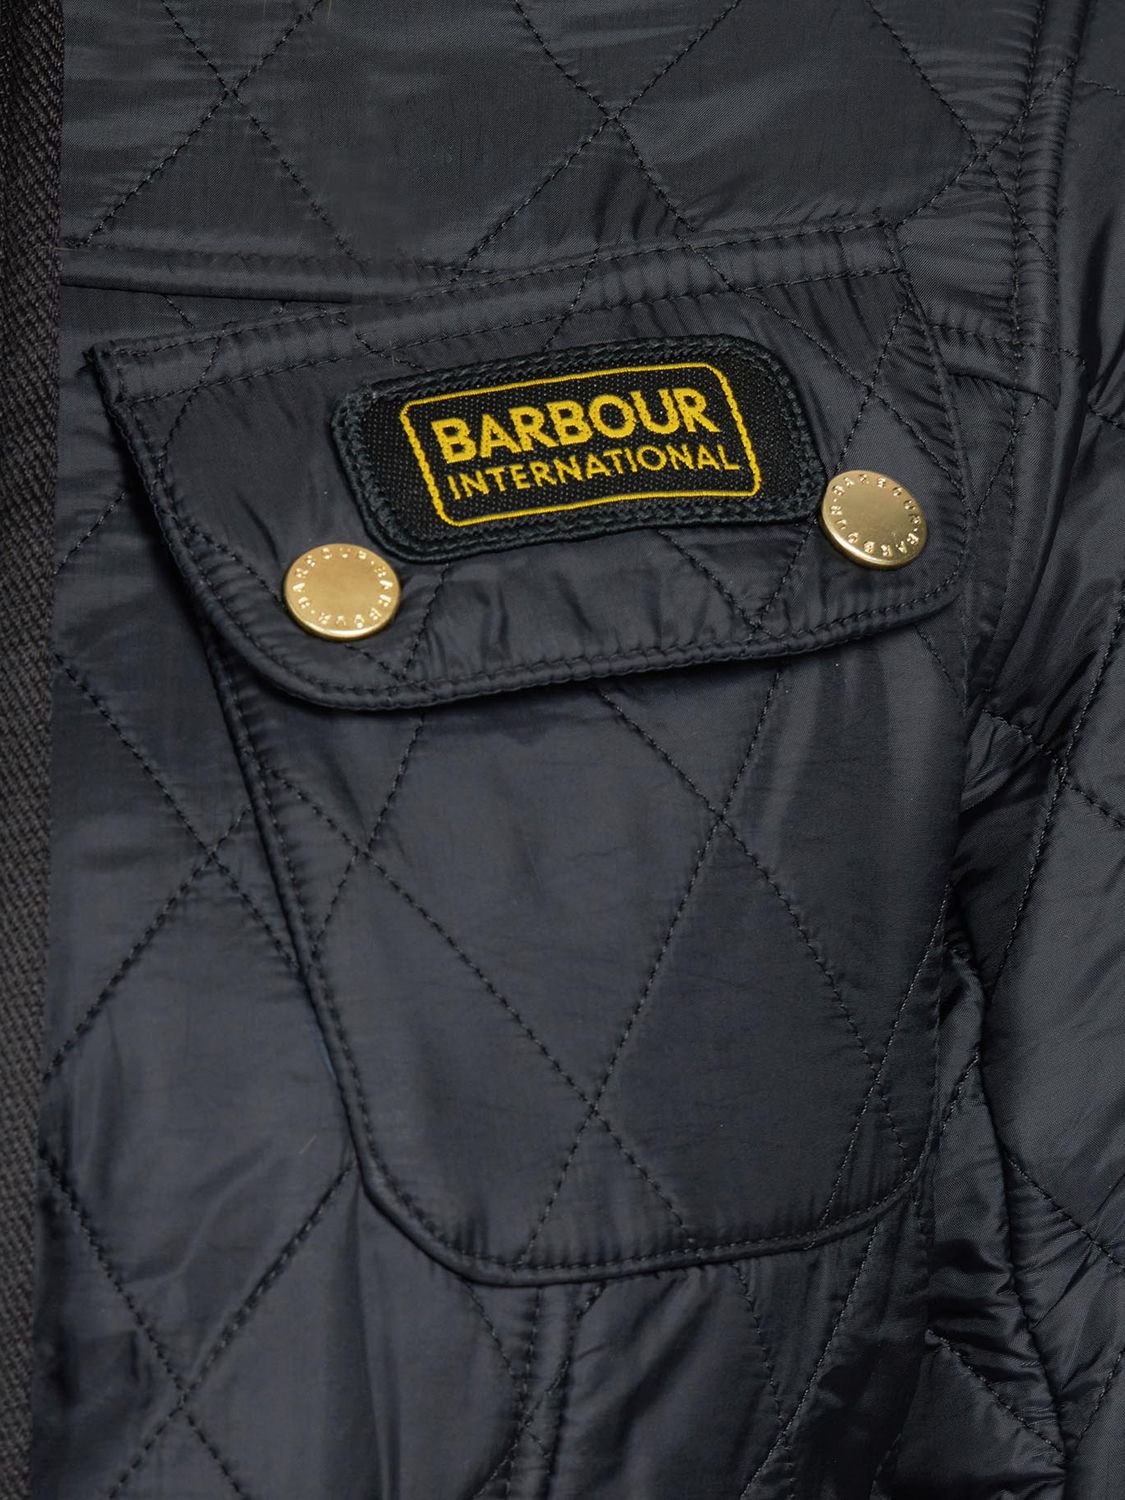 Barbour International Polar Quilted Jacket, Black at John Lewis & Partners